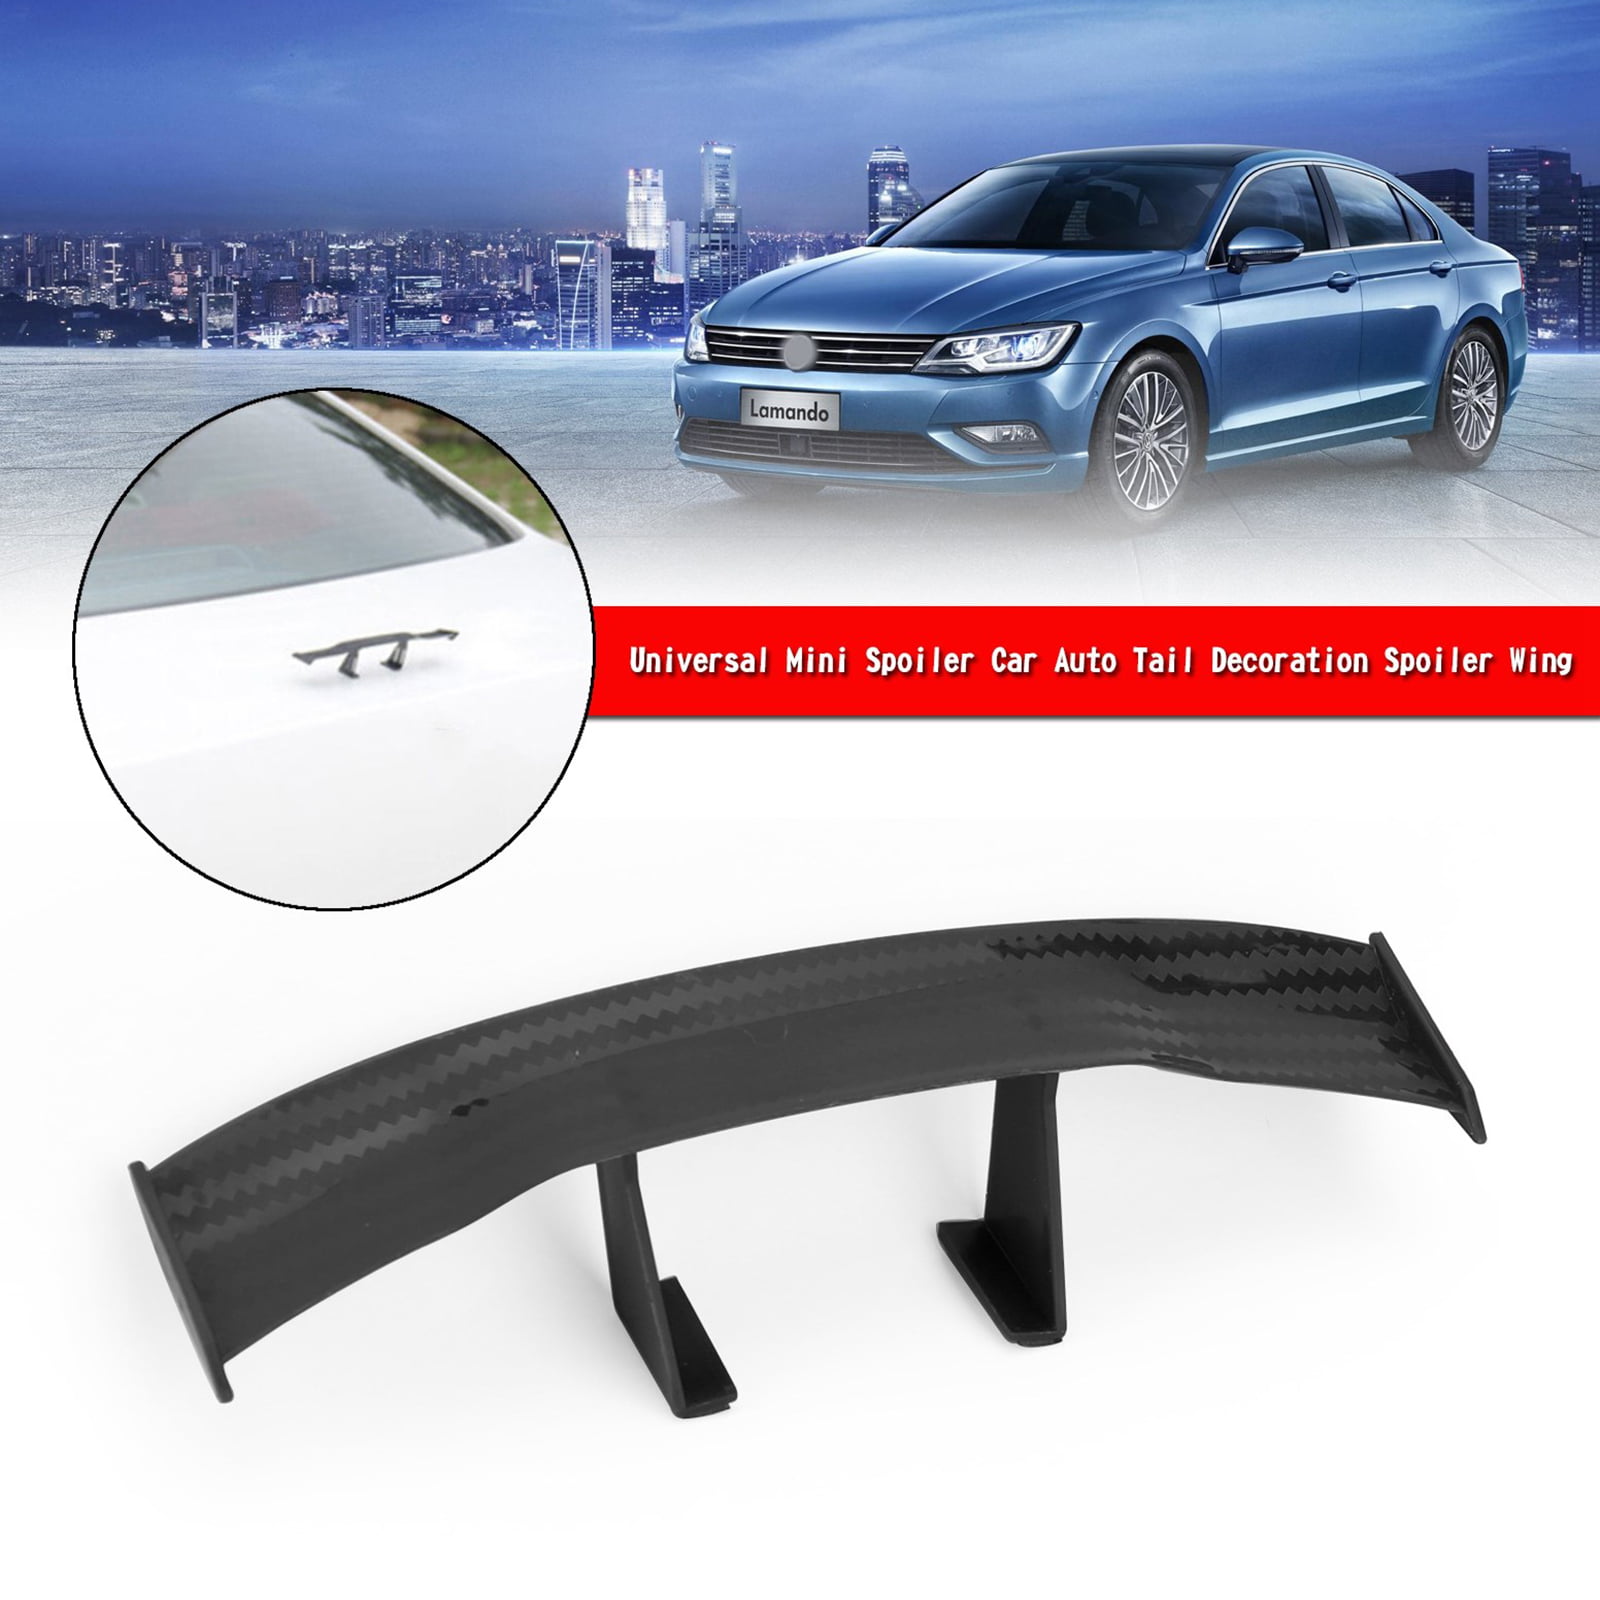 Universal Car Mini Spoiler Wing Auto Car Tail Wing Mini Auto Carbon Fiber  Texture Decoration Without Perforation Tail Decoration (black)